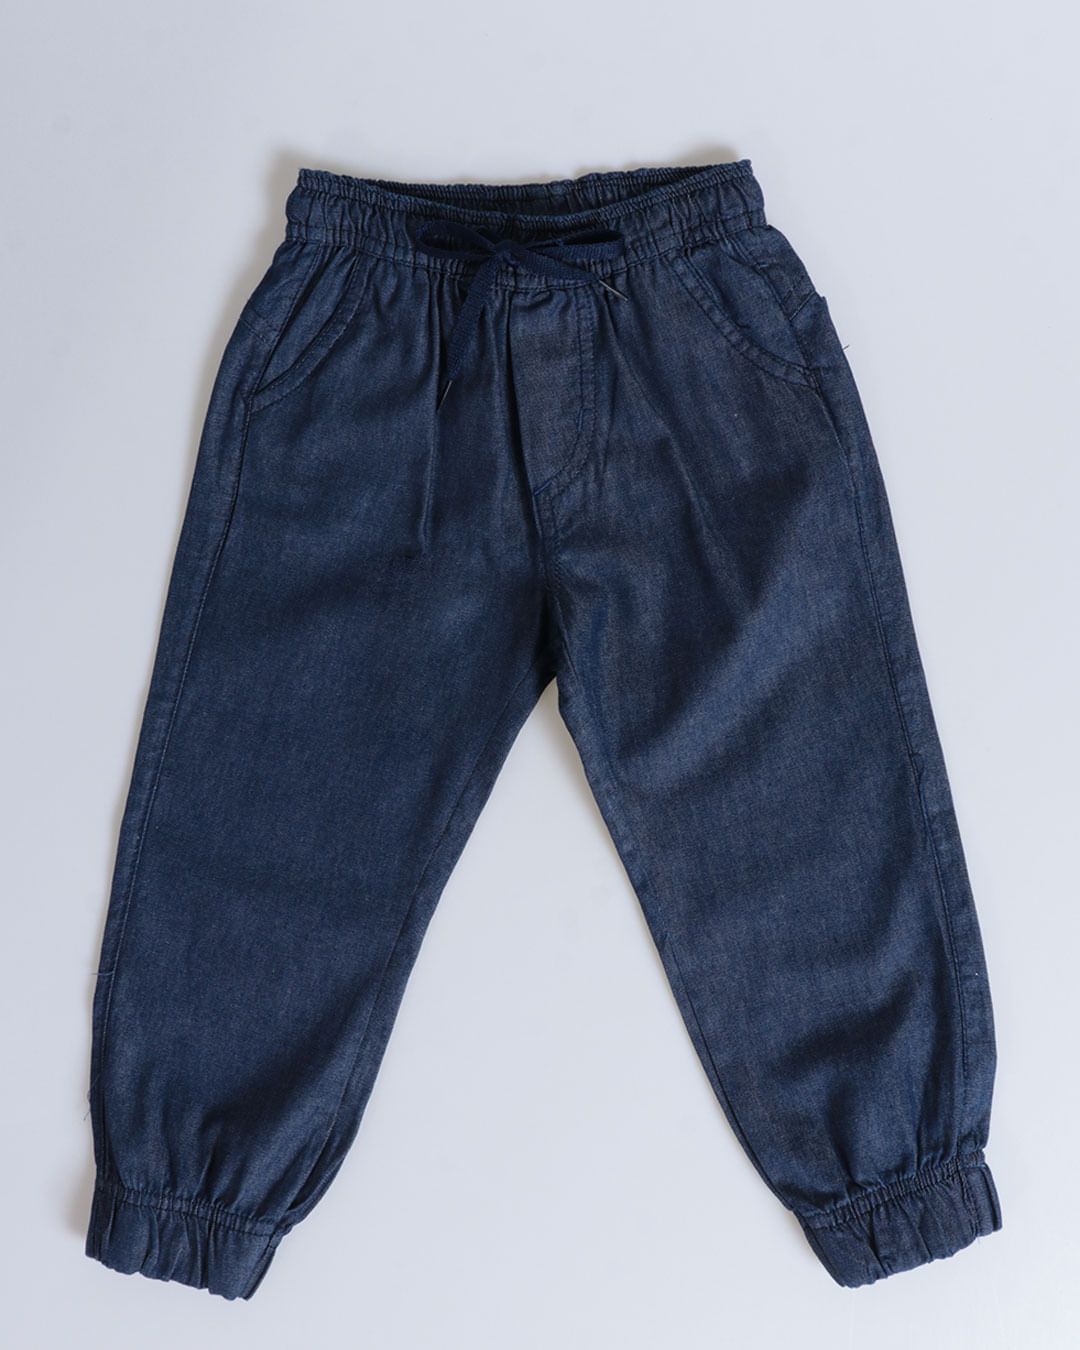 39521000087045-blue-jeans-medio-1